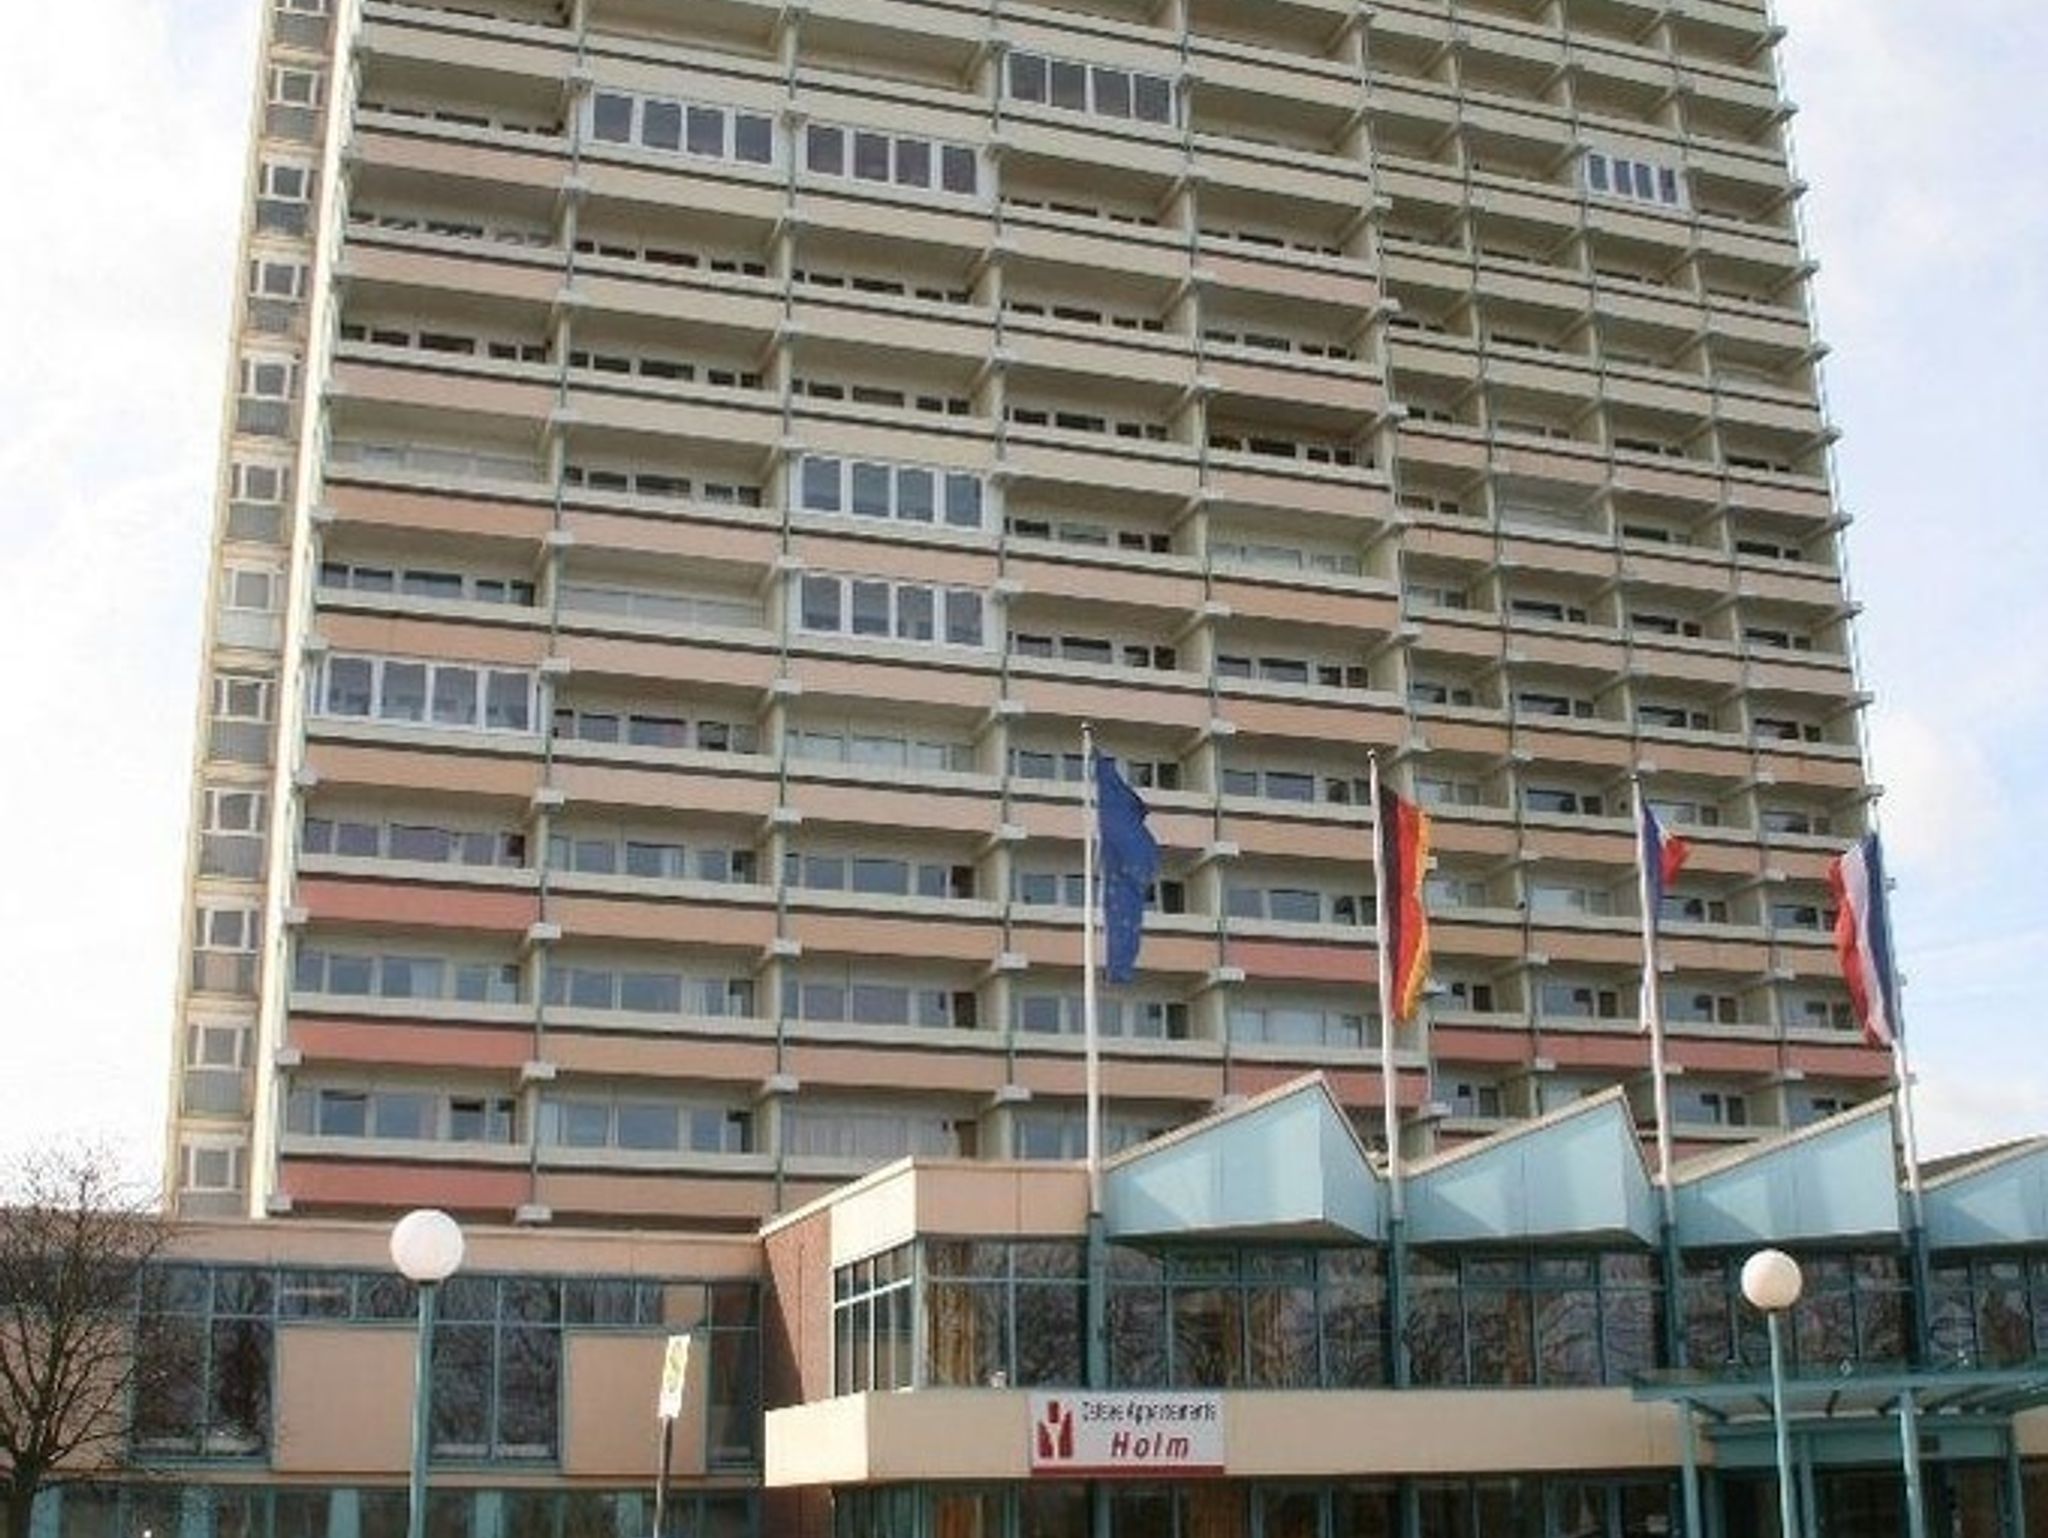 Dorint Strandhotel & Spa